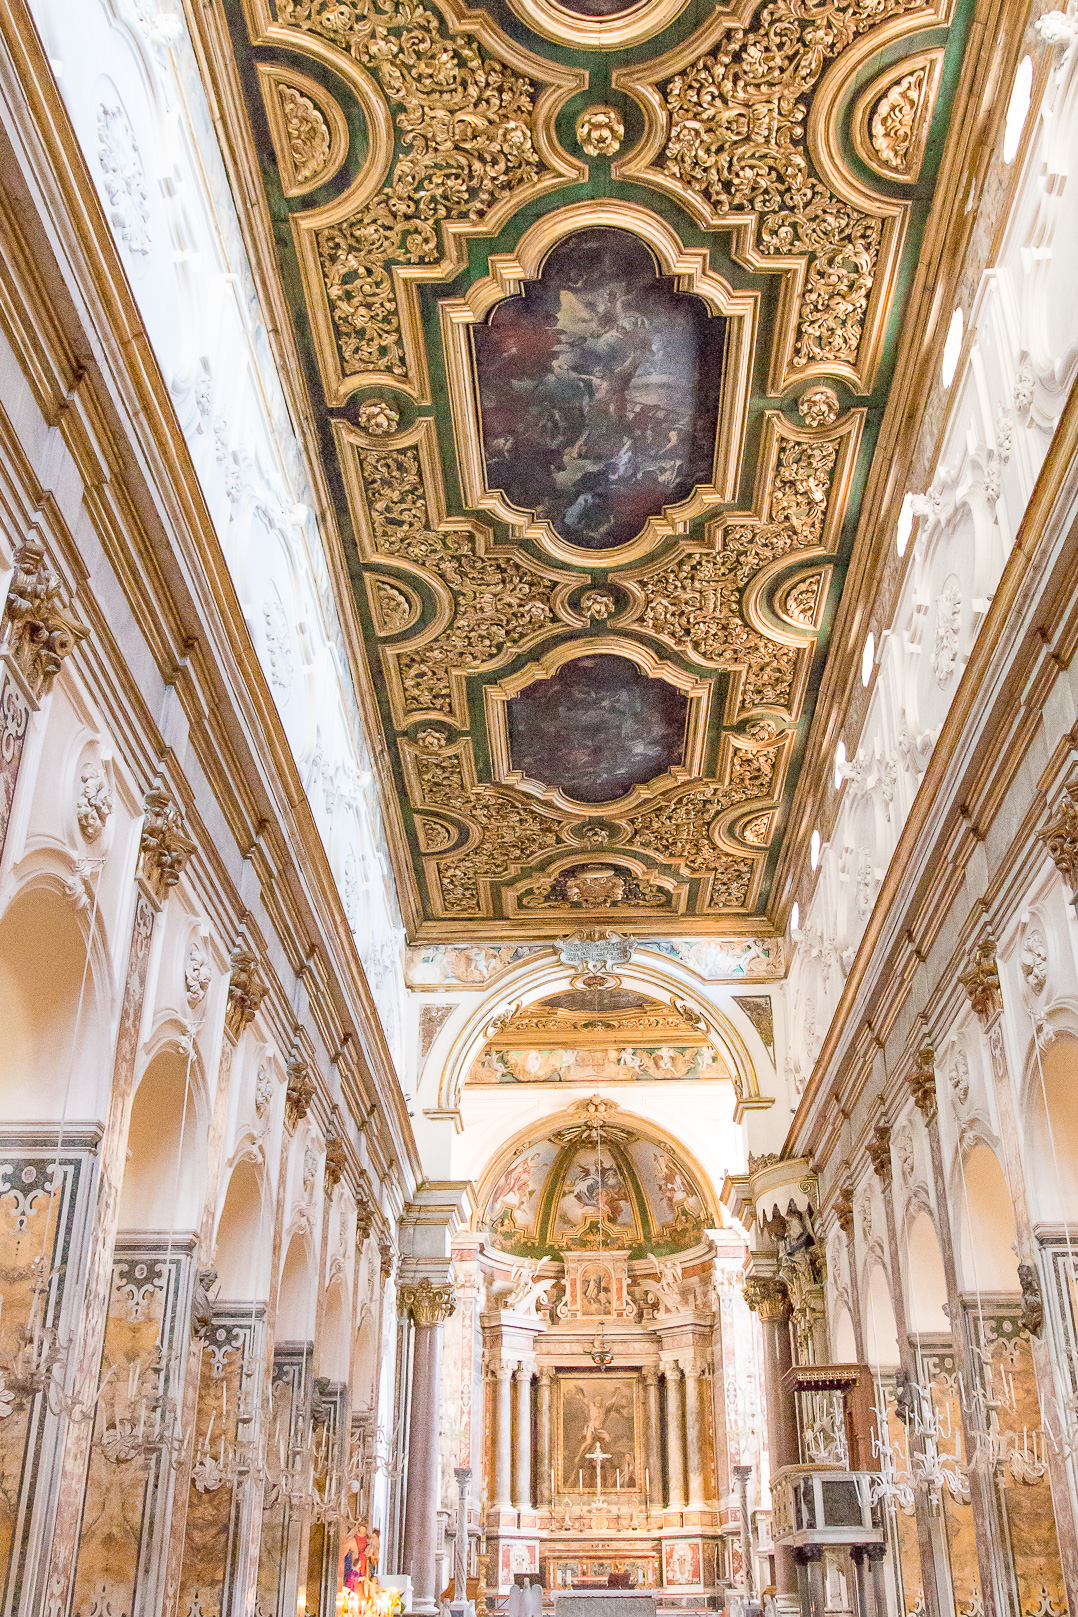 Inside the church at Amalfi.